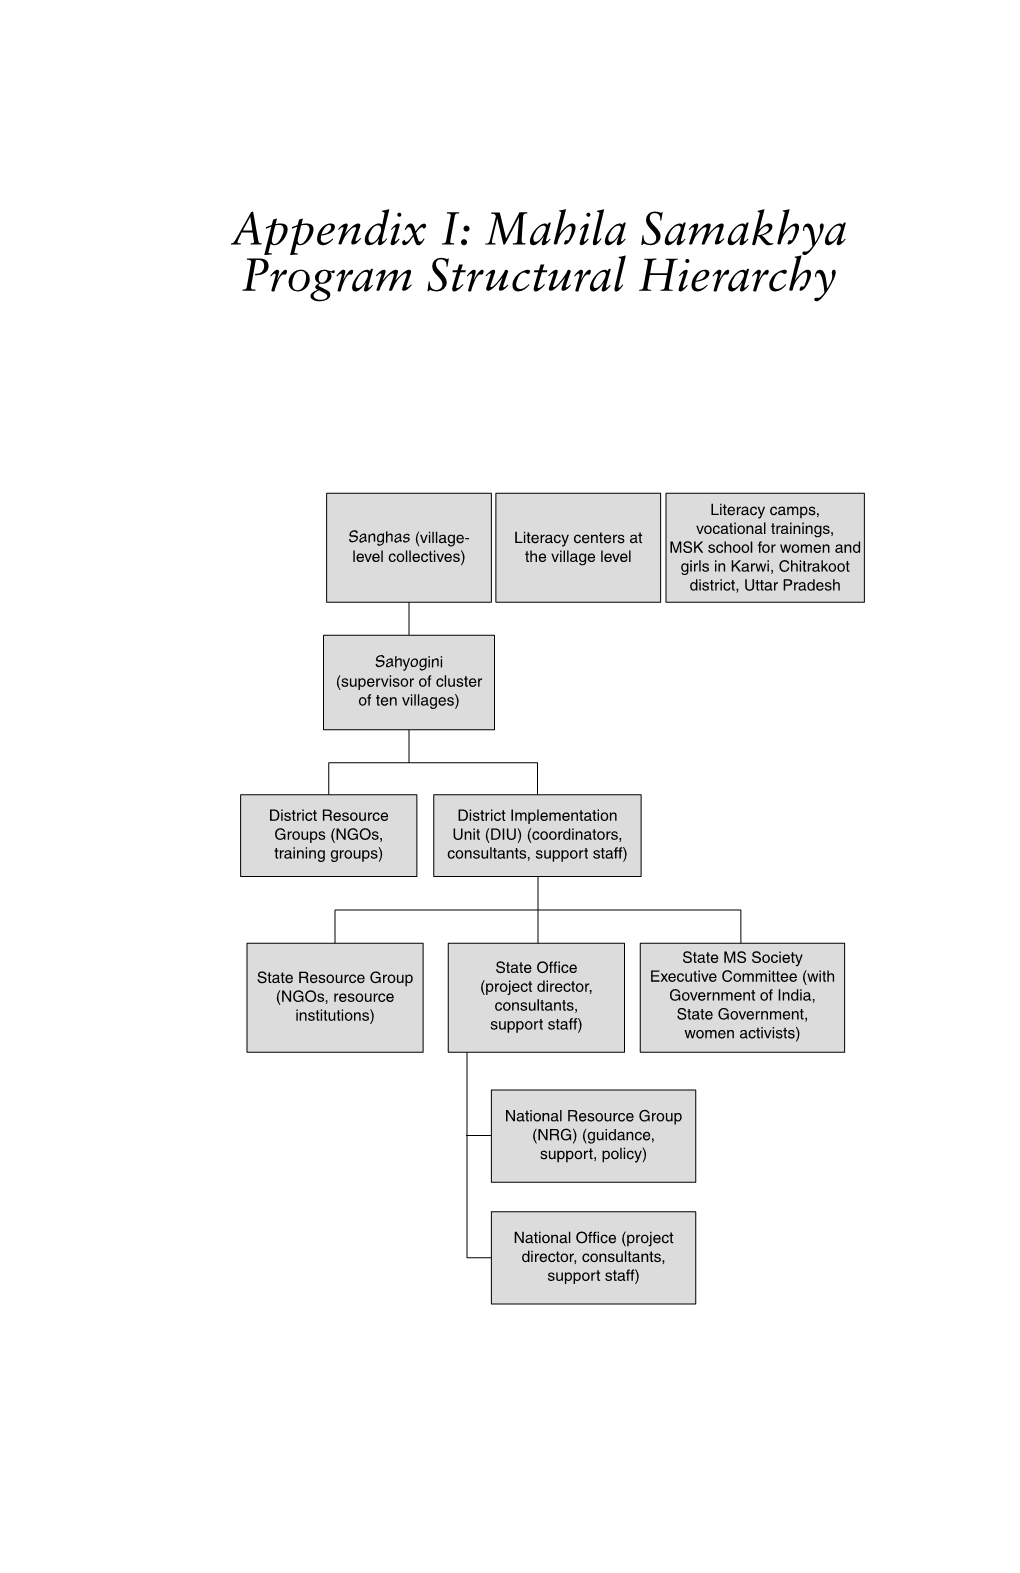 Appendix I: Mahila Samakhya Program Structural Hierarchy